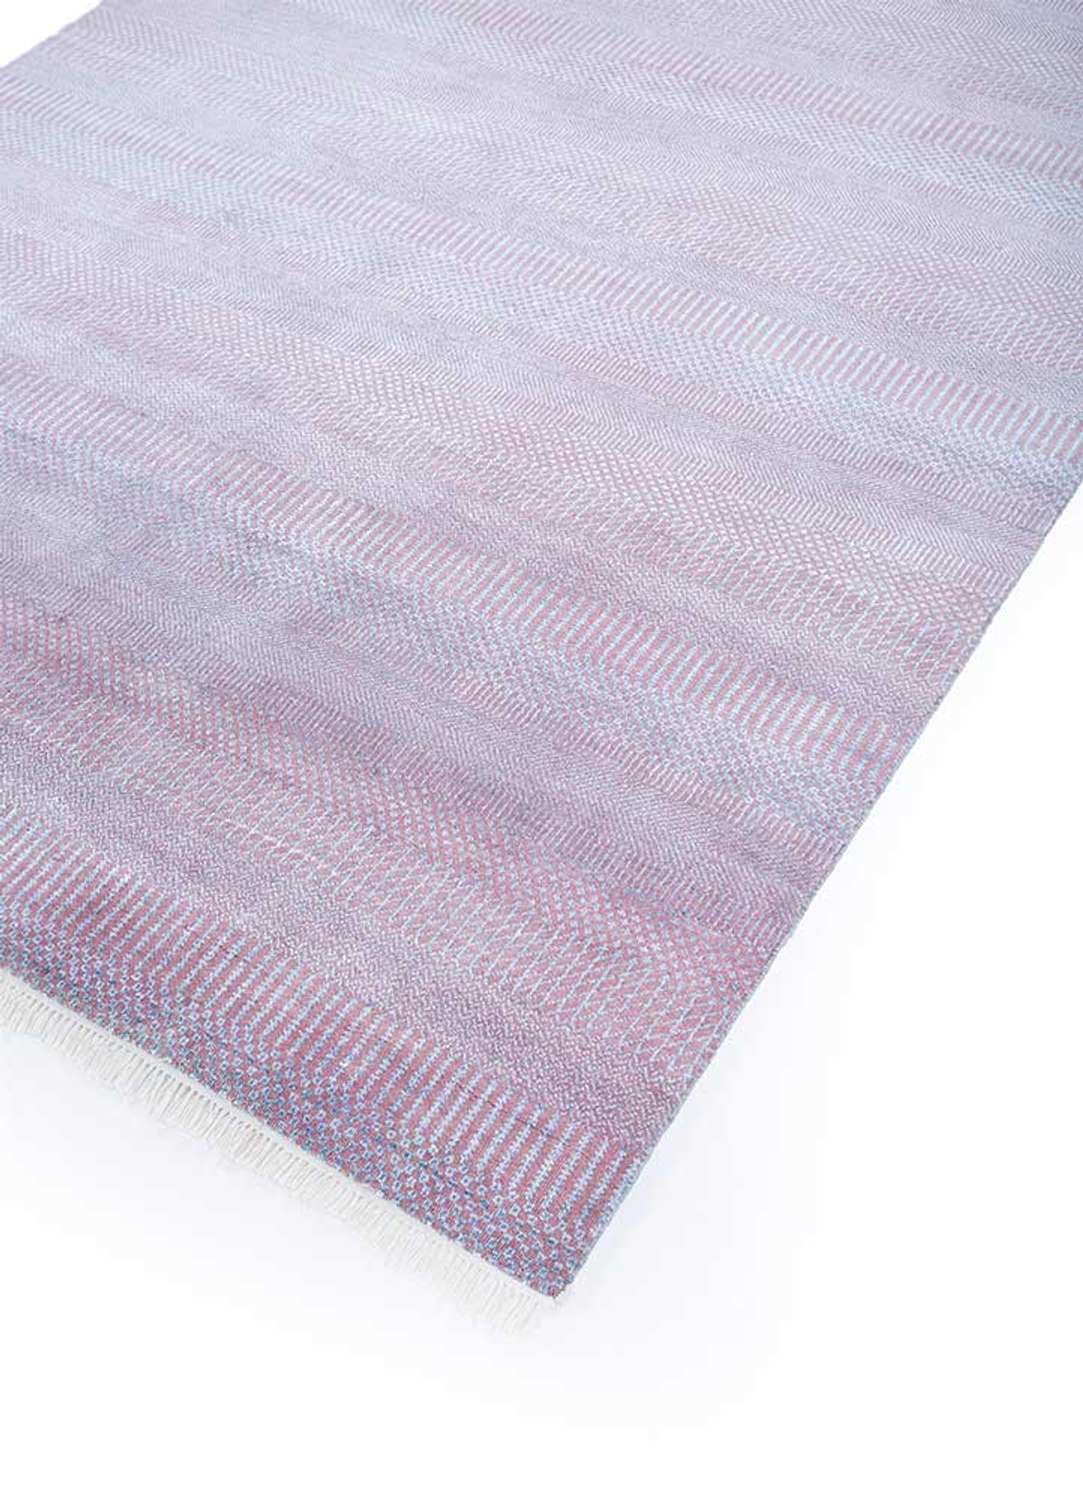 Tapete de lã - Jakari - rectangular